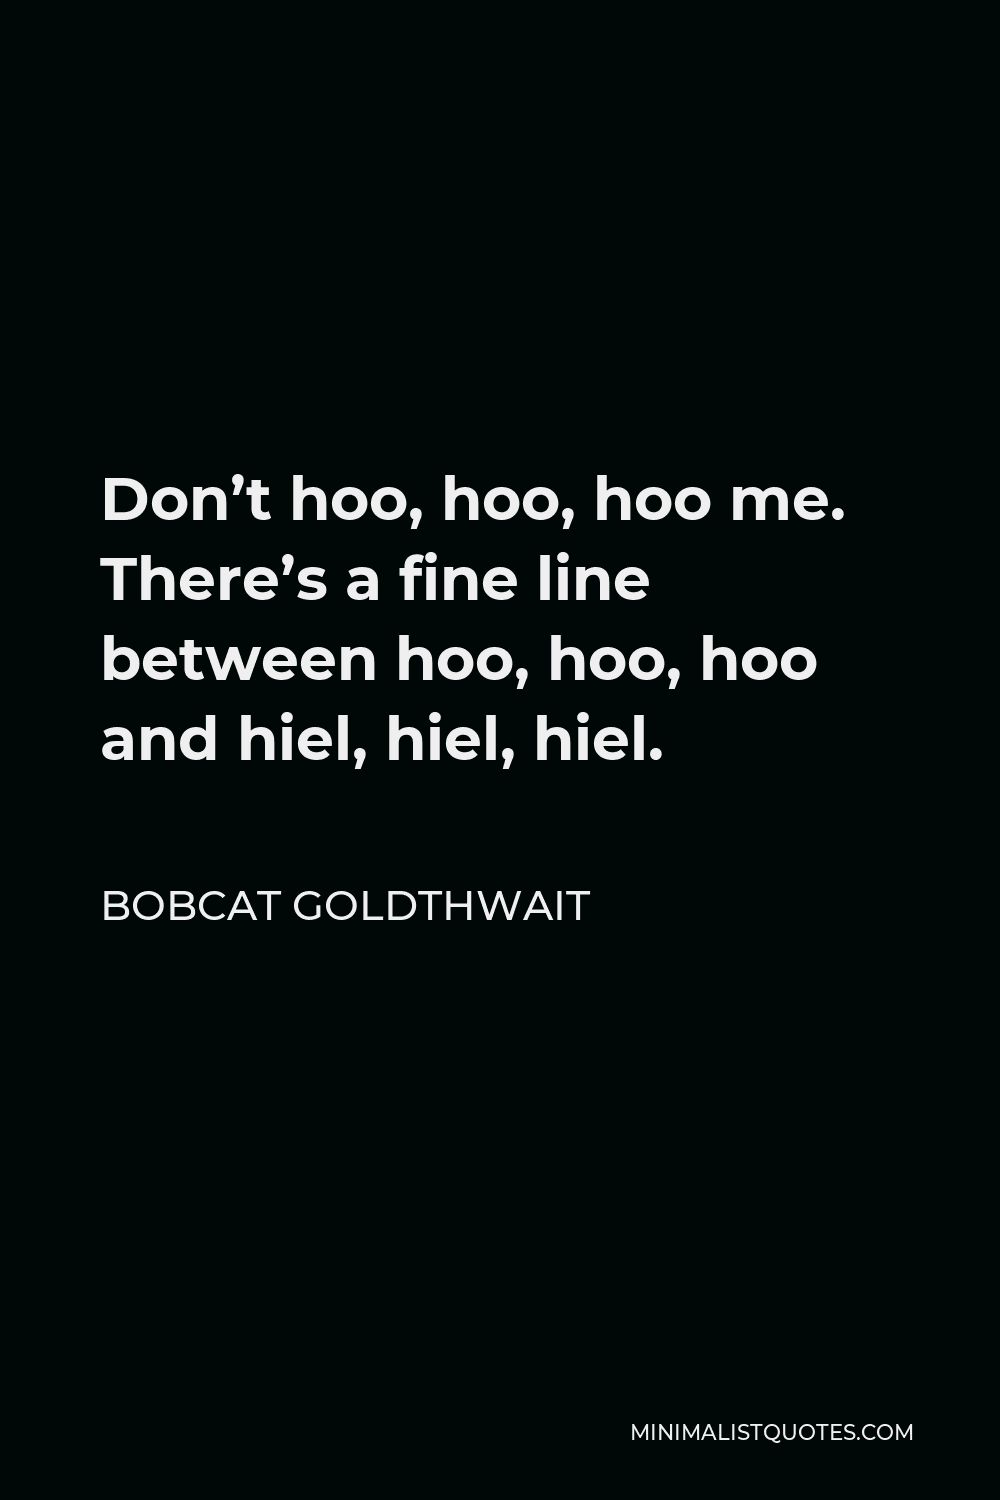 Bobcat Goldthwait Quote - Don’t hoo, hoo, hoo me. There’s a fine line between hoo, hoo, hoo and hiel, hiel, hiel.